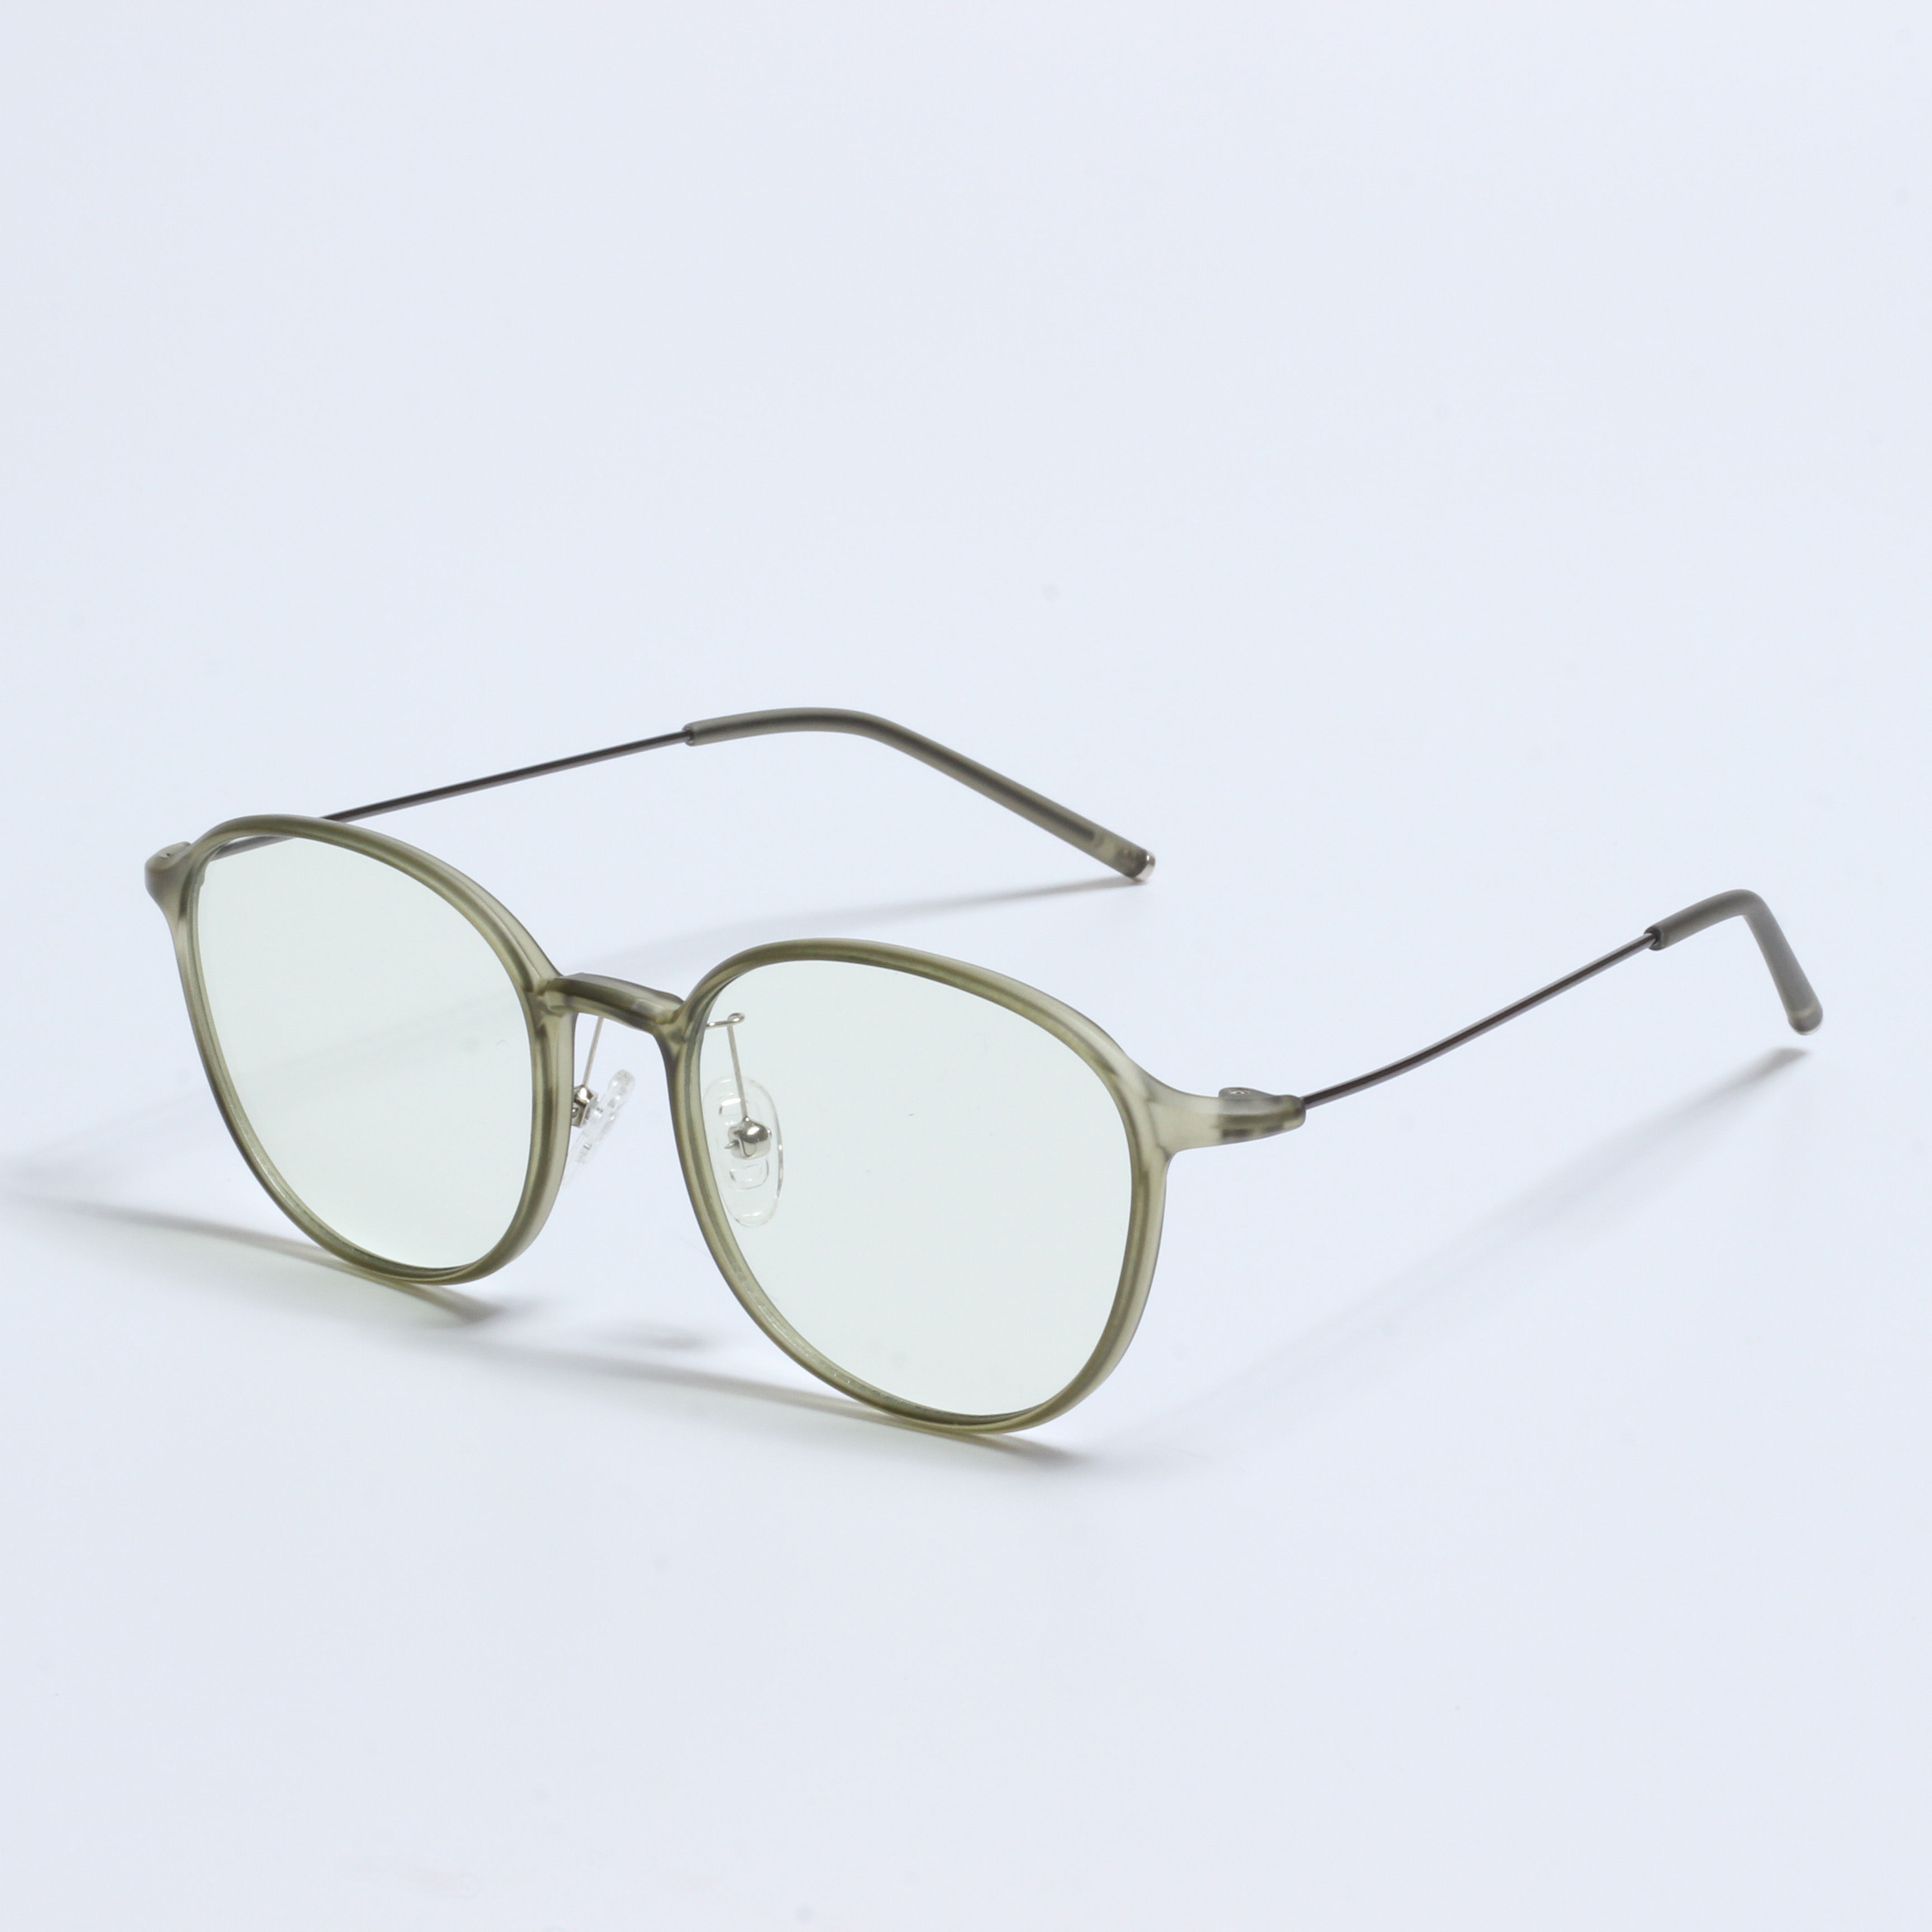 Gruthannel Tr90 optyske bril (12)